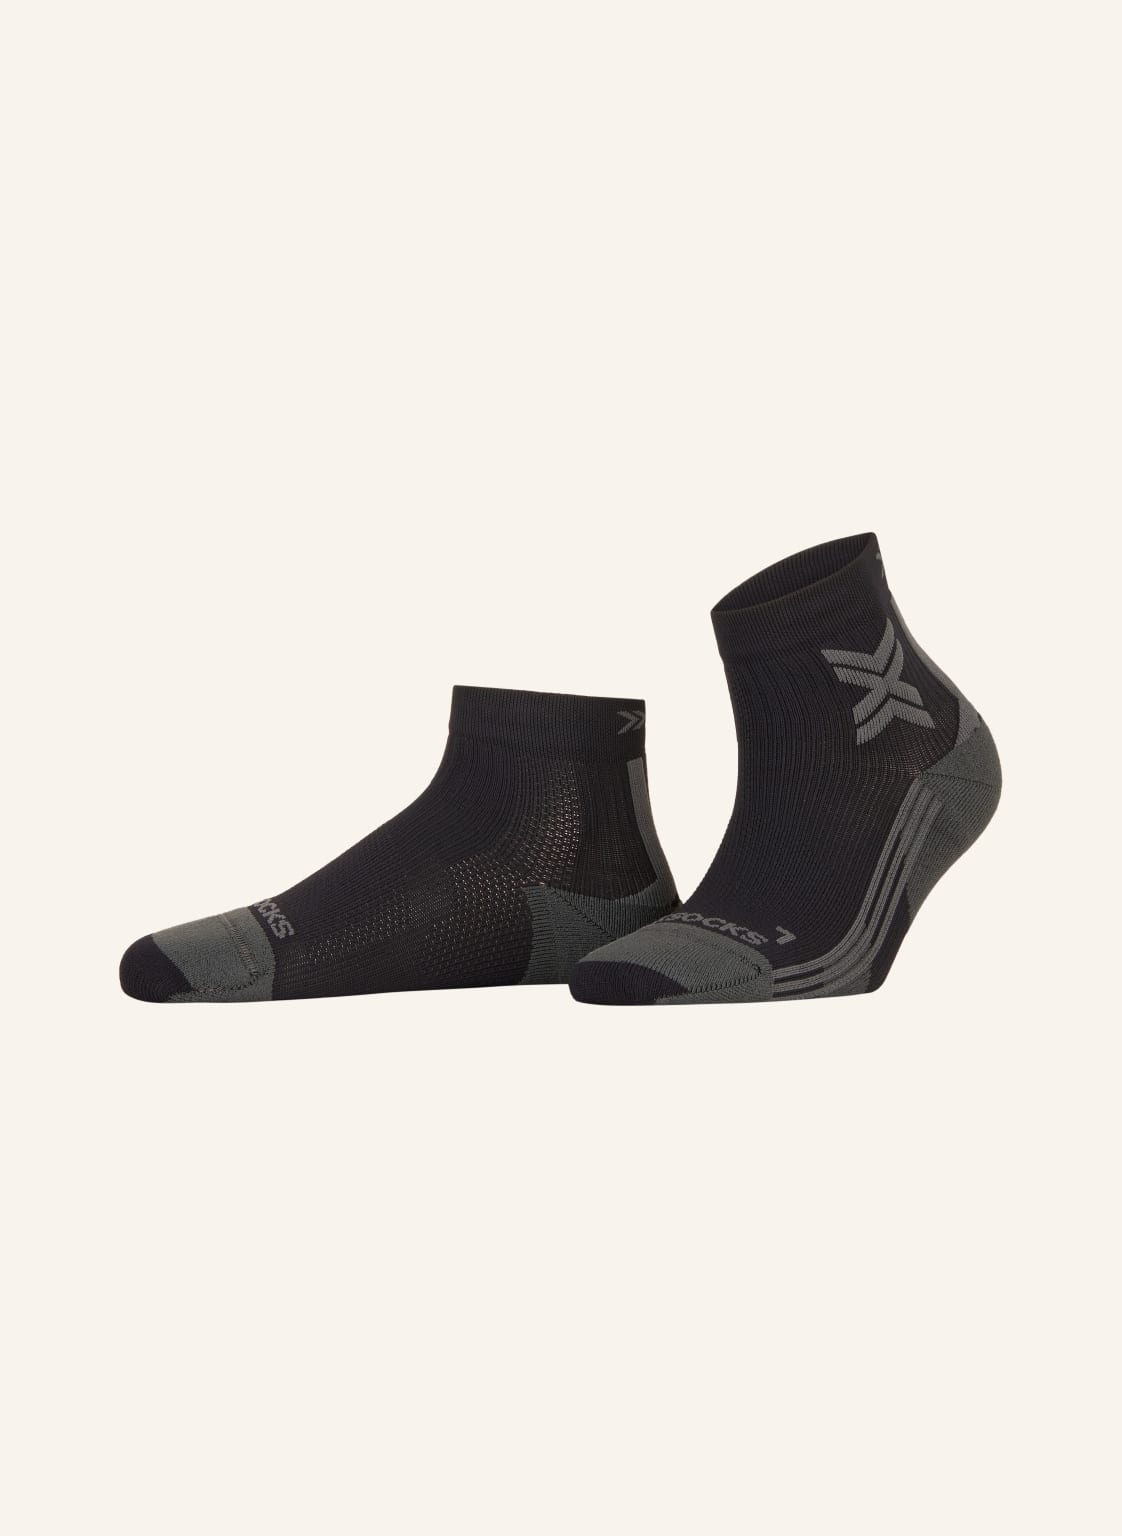 X-Socks Laufsocken Run Discover Ankle schwarz von X-SOCKS